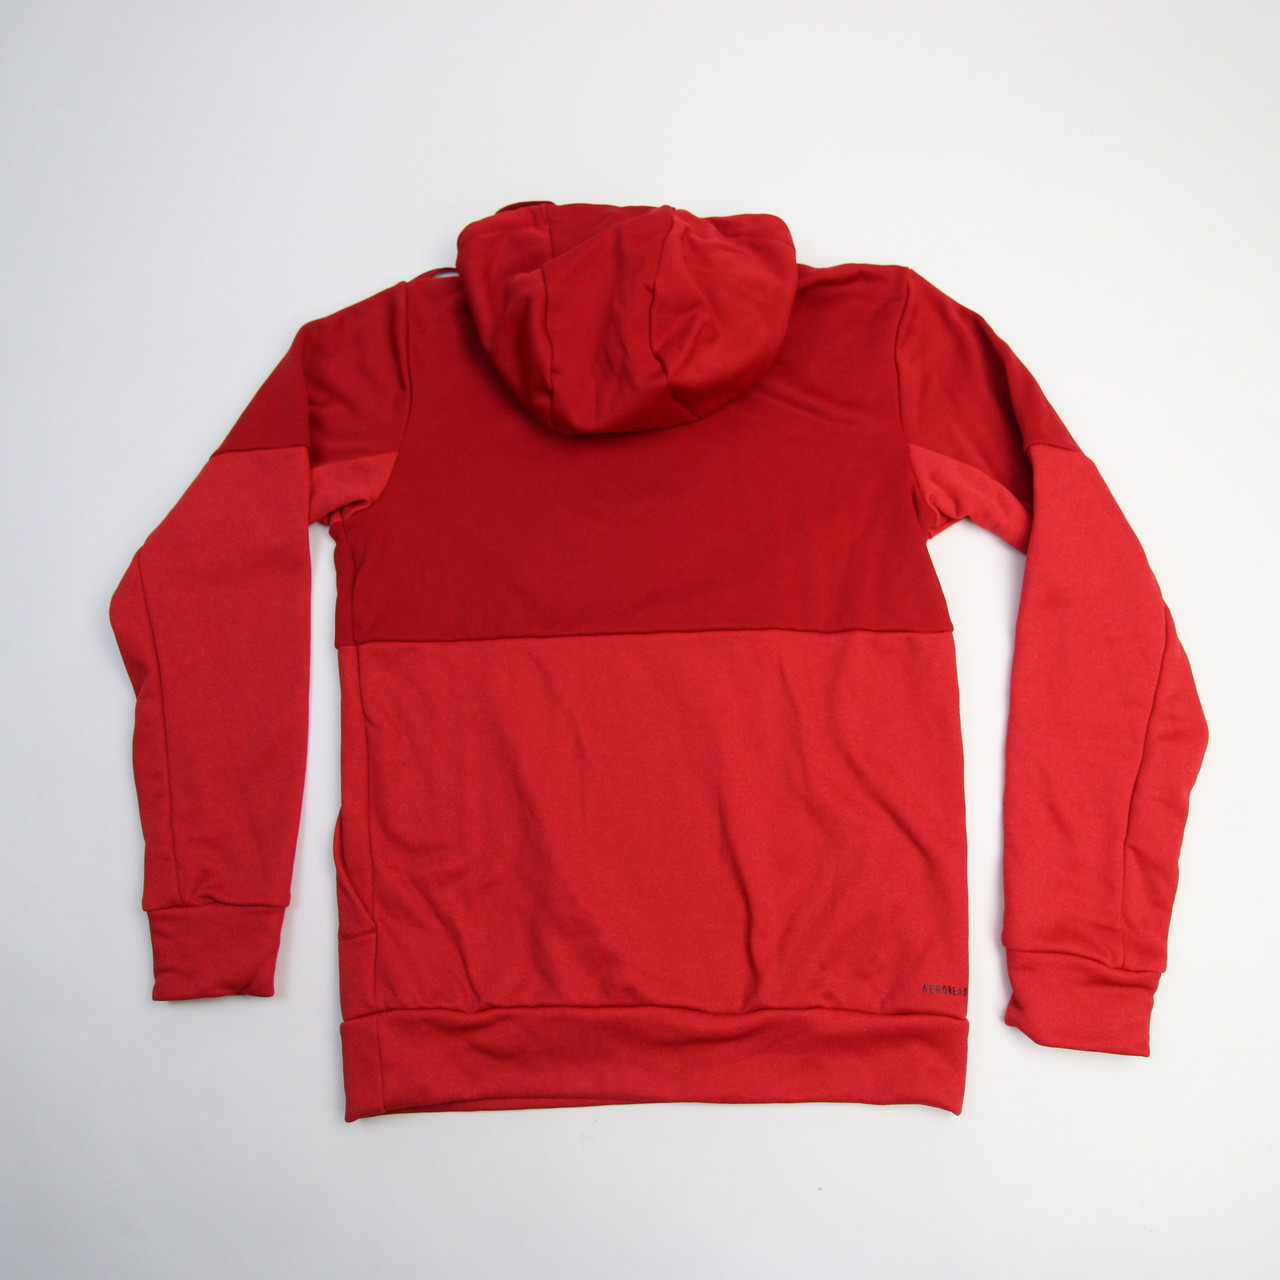 red louisville sweatshirt